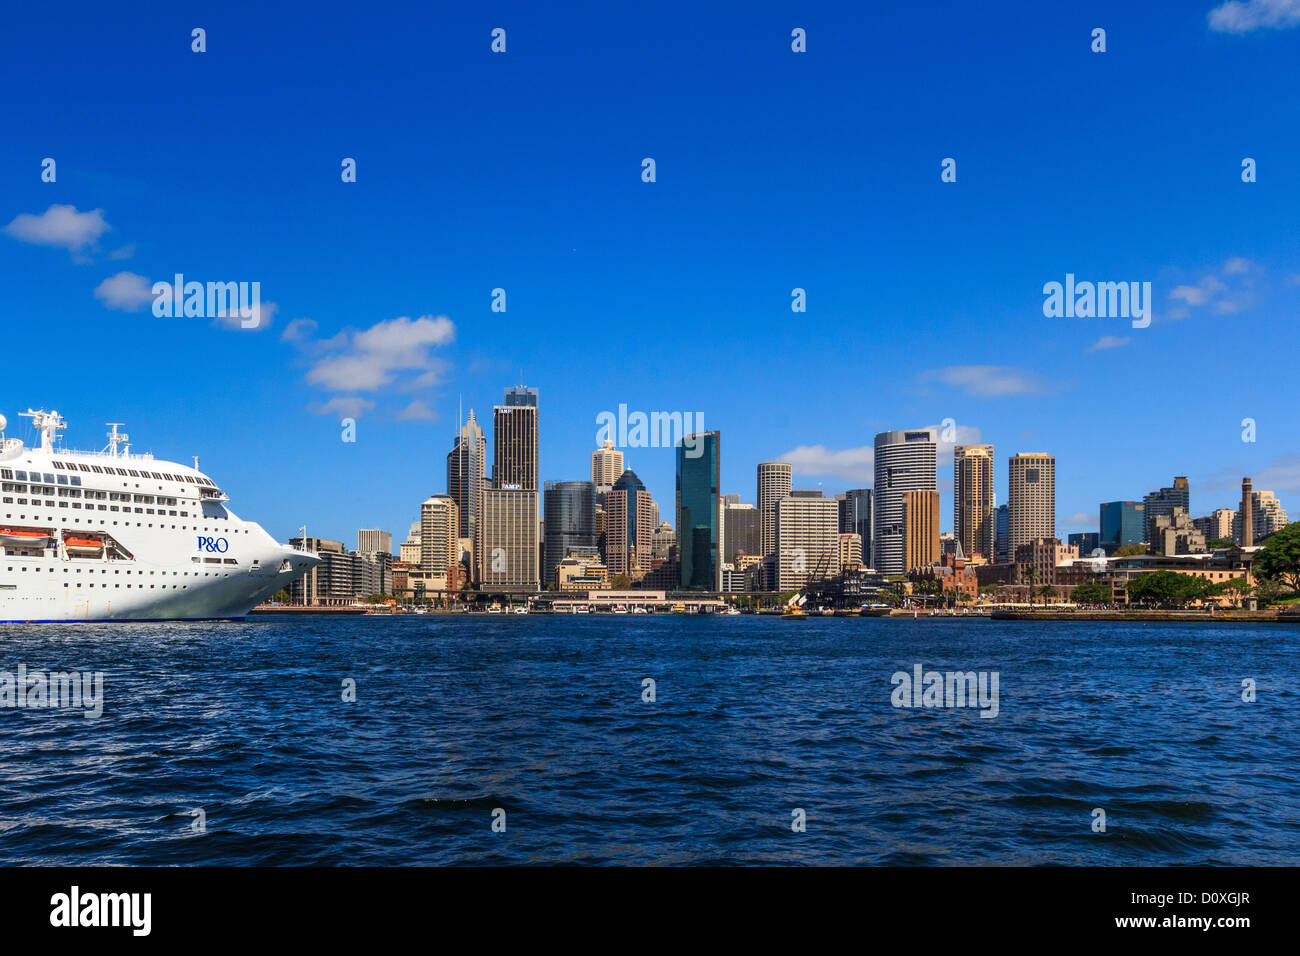 Australia, NSW, New South Wales, Sydney, skyline, tourism, city, buildings, ship, boat, cruise ship, bridge, Stock Photo